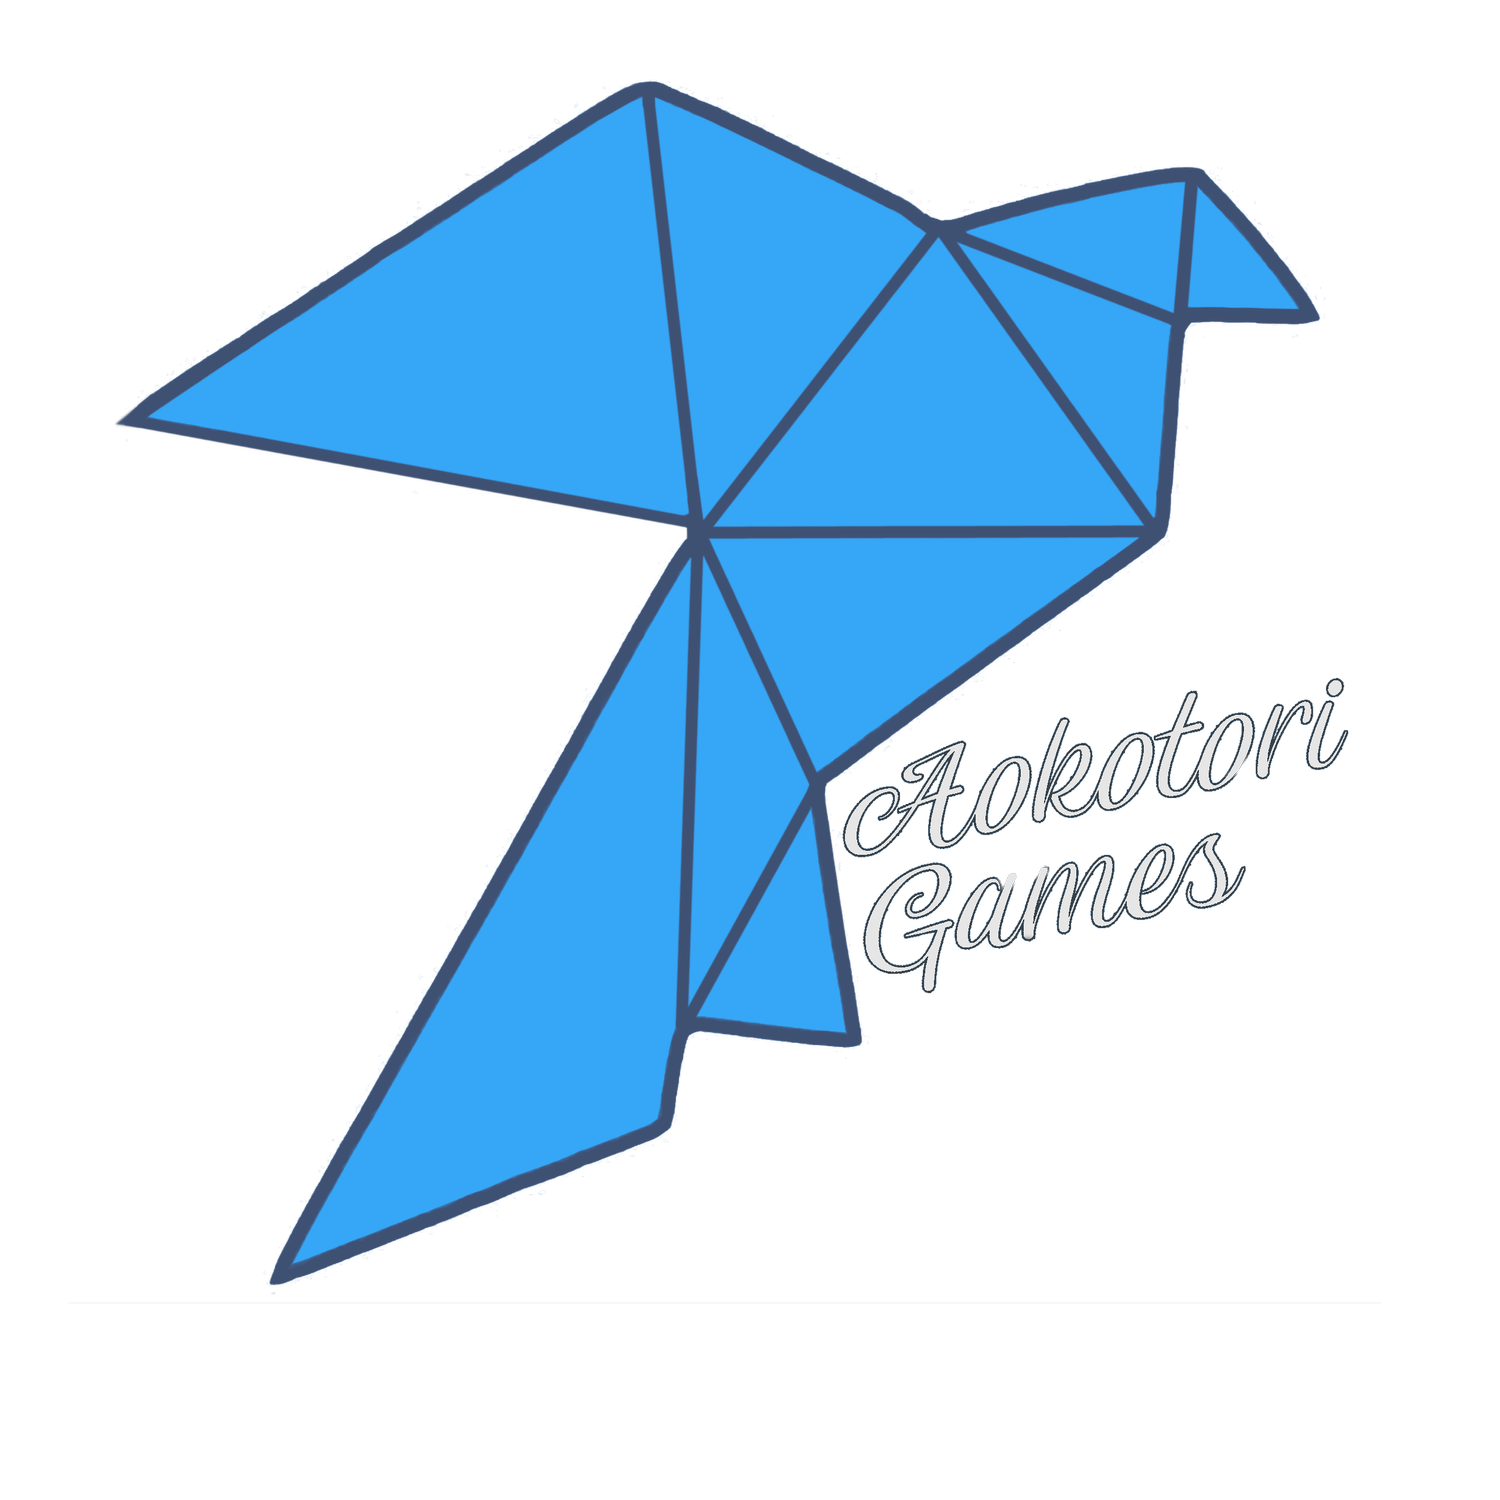 Aokotori Games